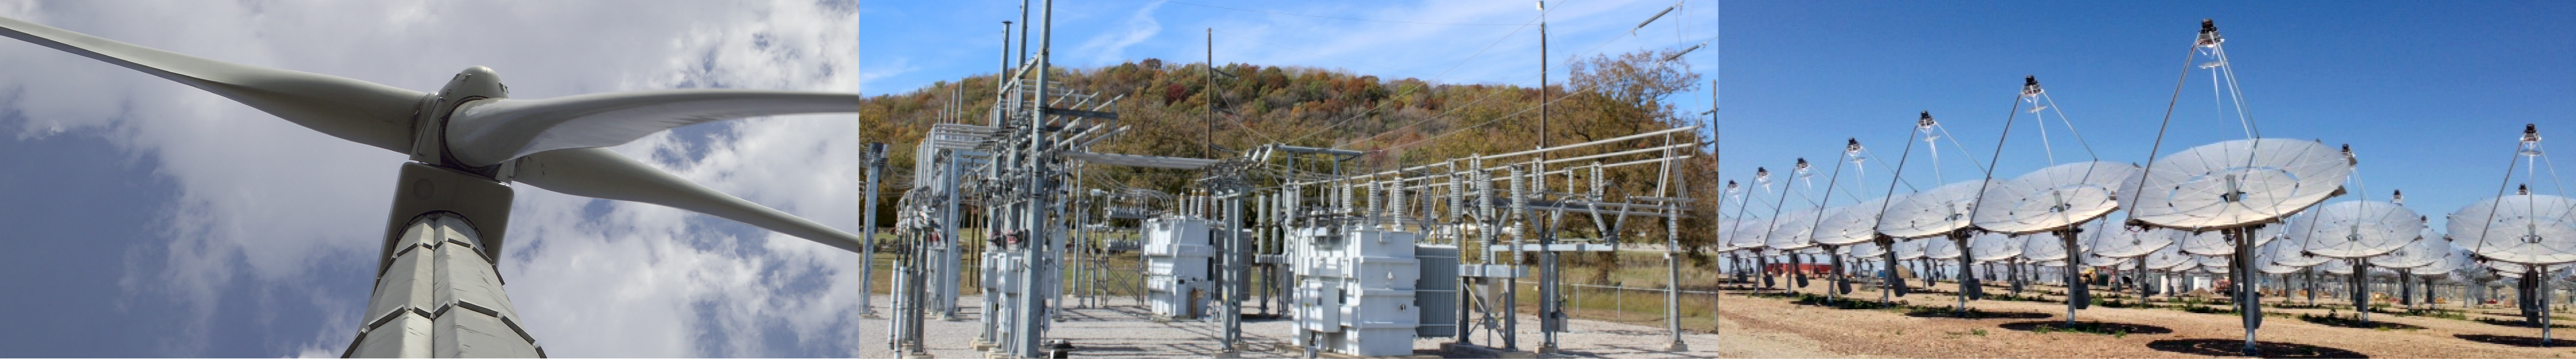 Galvanized Steel Electrical Utility Communication